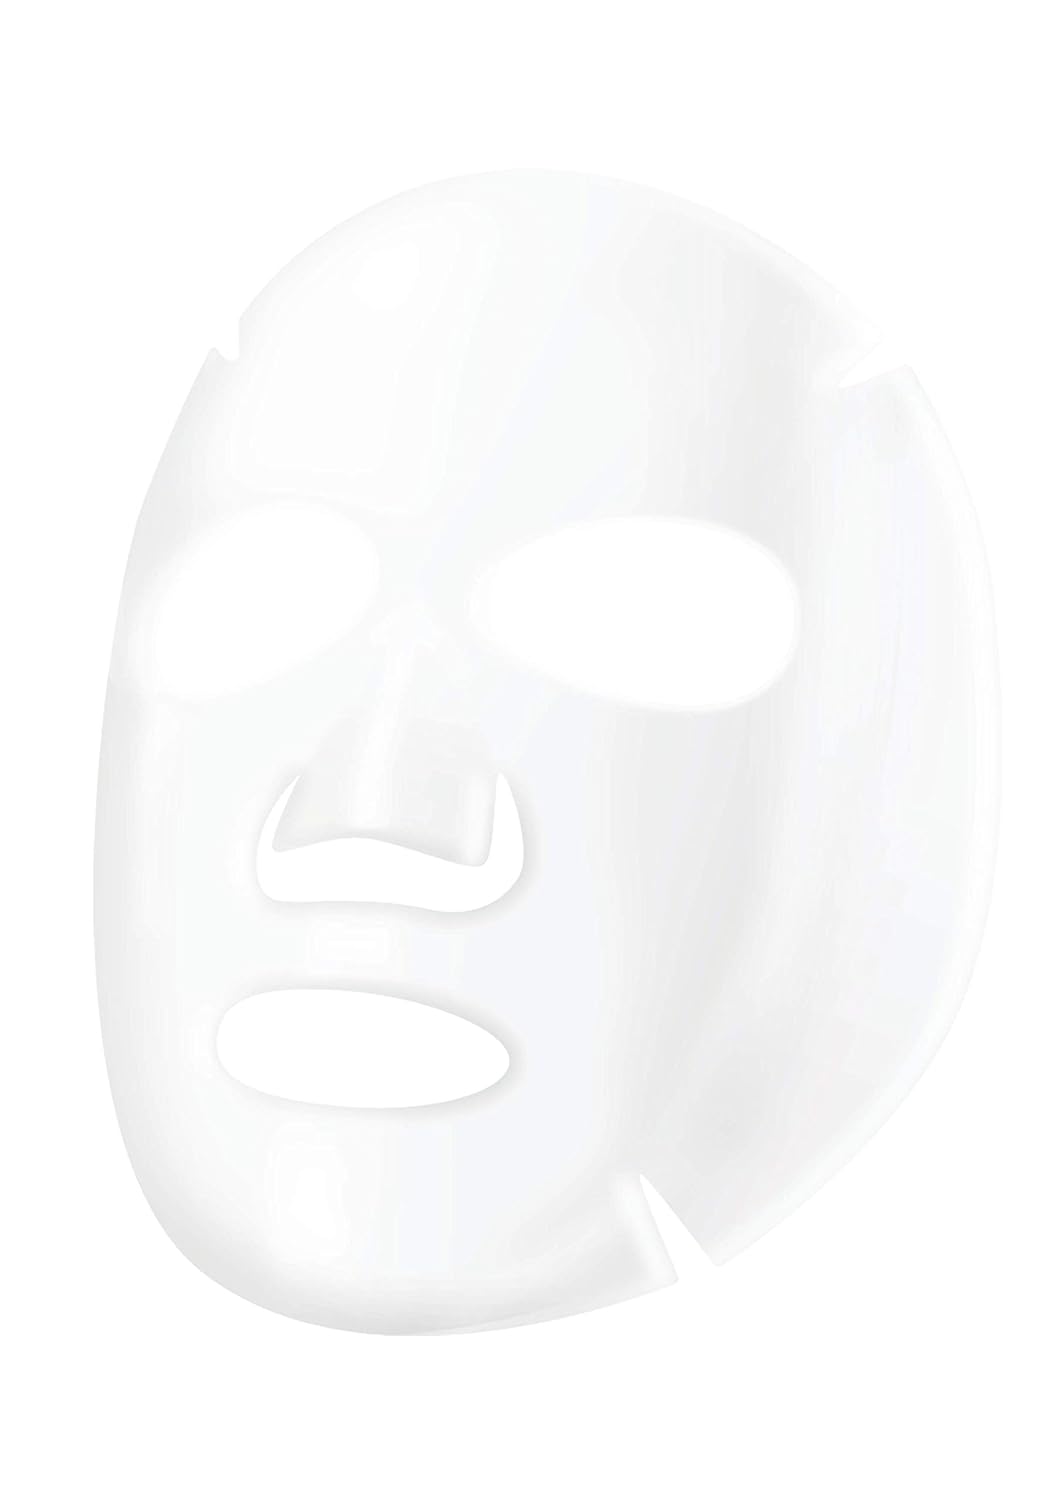 Jayjun - Intensive Shining Mask 25ml